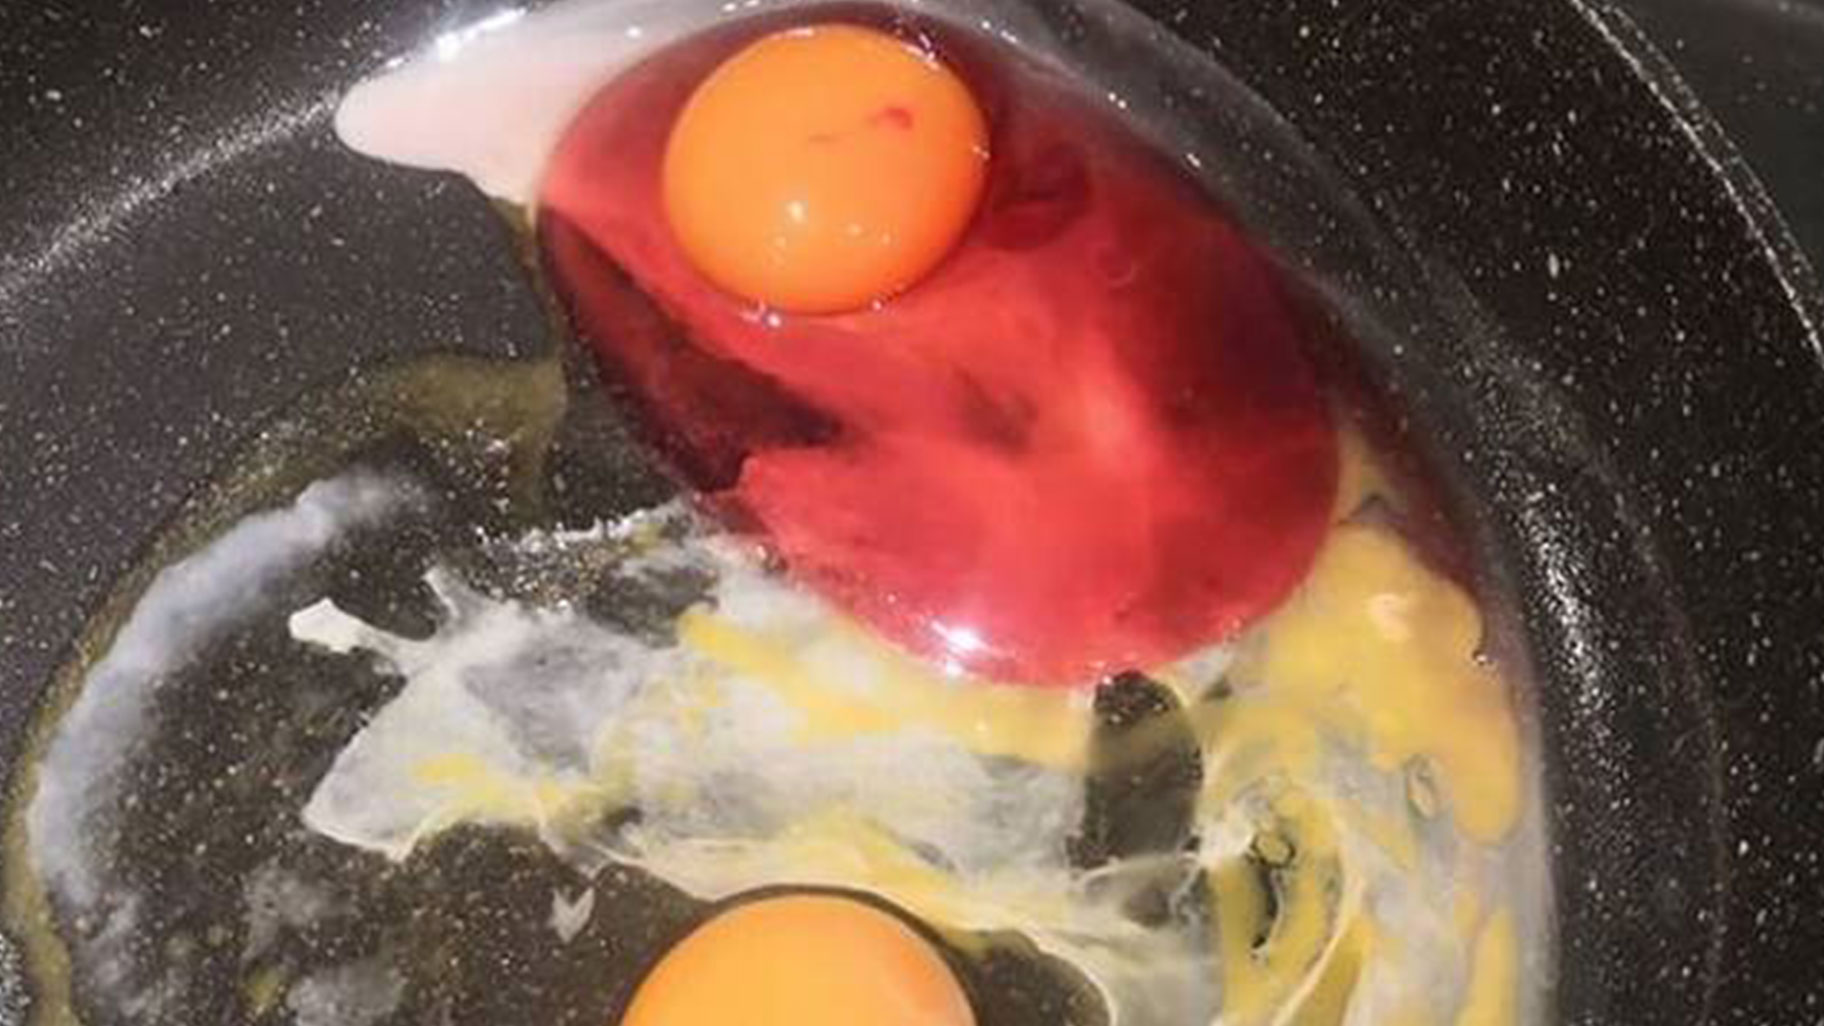 Nemlig Fugtig maskine Woman Warned Not To Eat Red Egg After Cracking It Into Pan | TOTUM